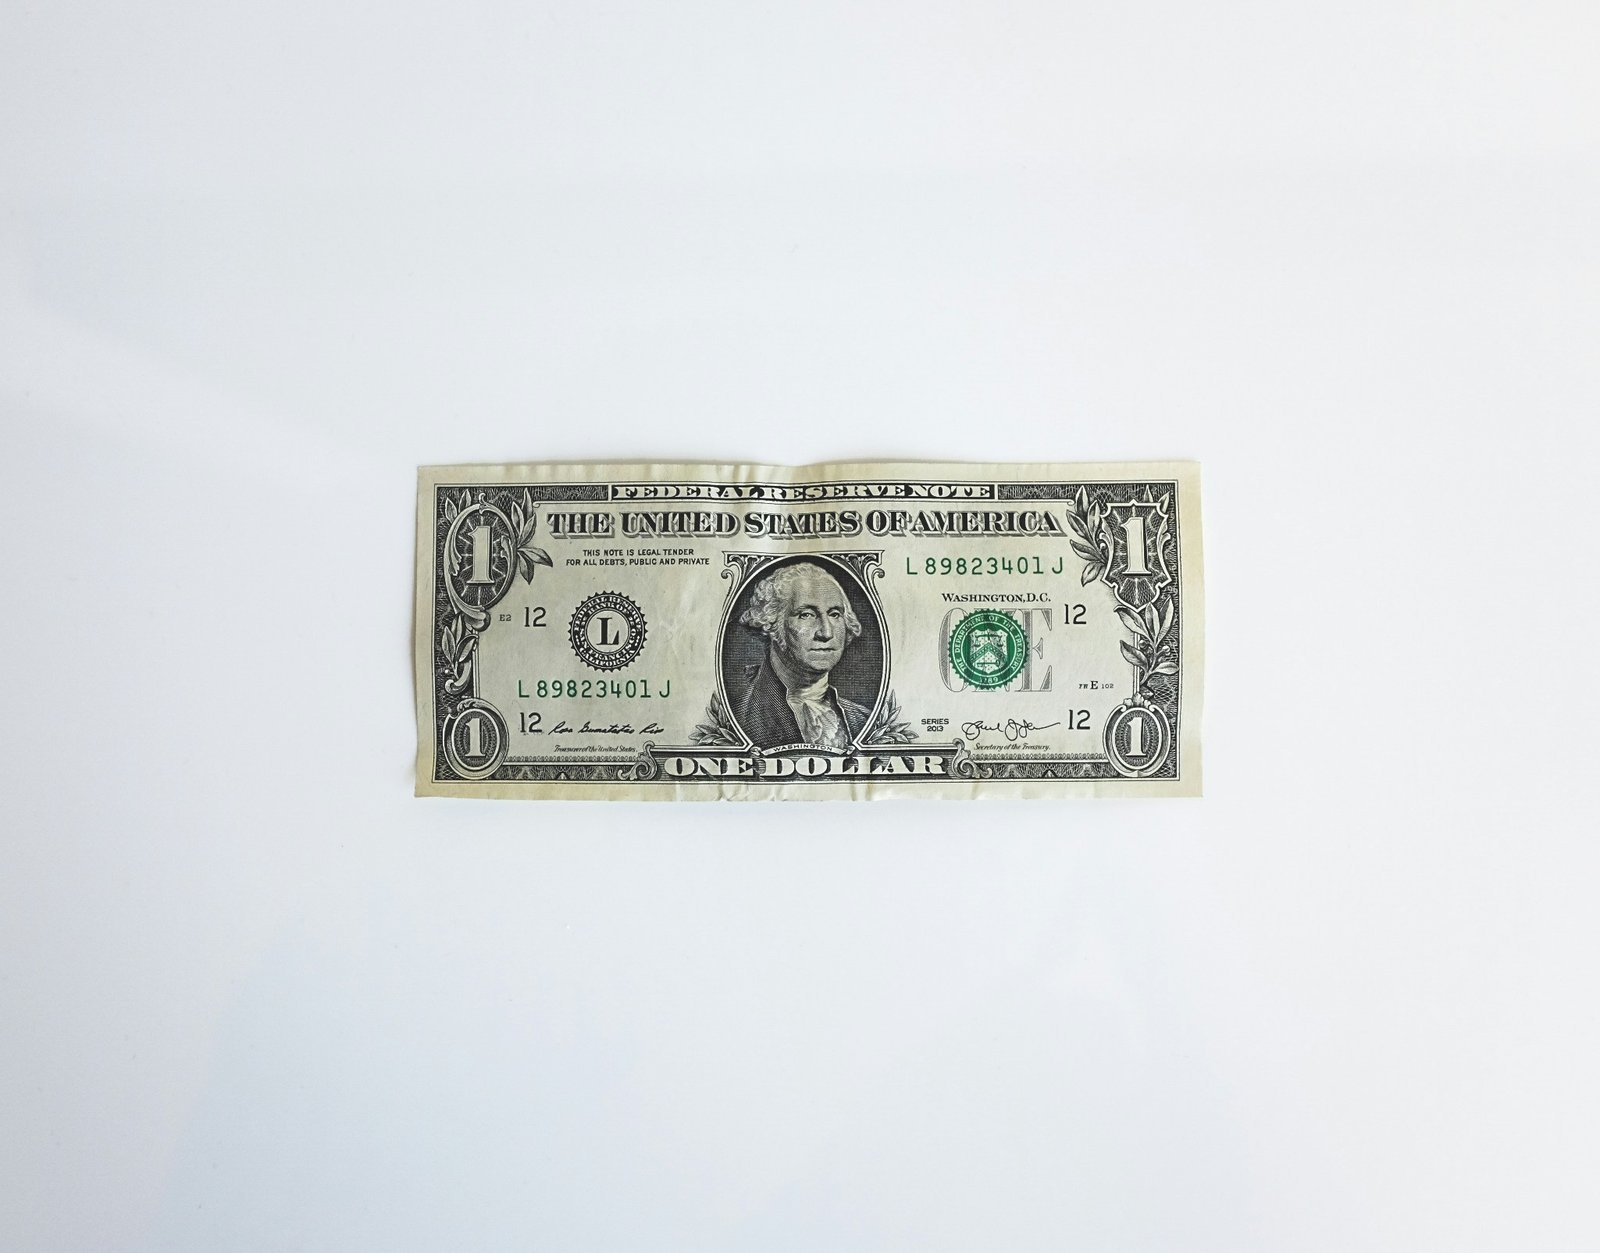 1 U.S. dollar banknote